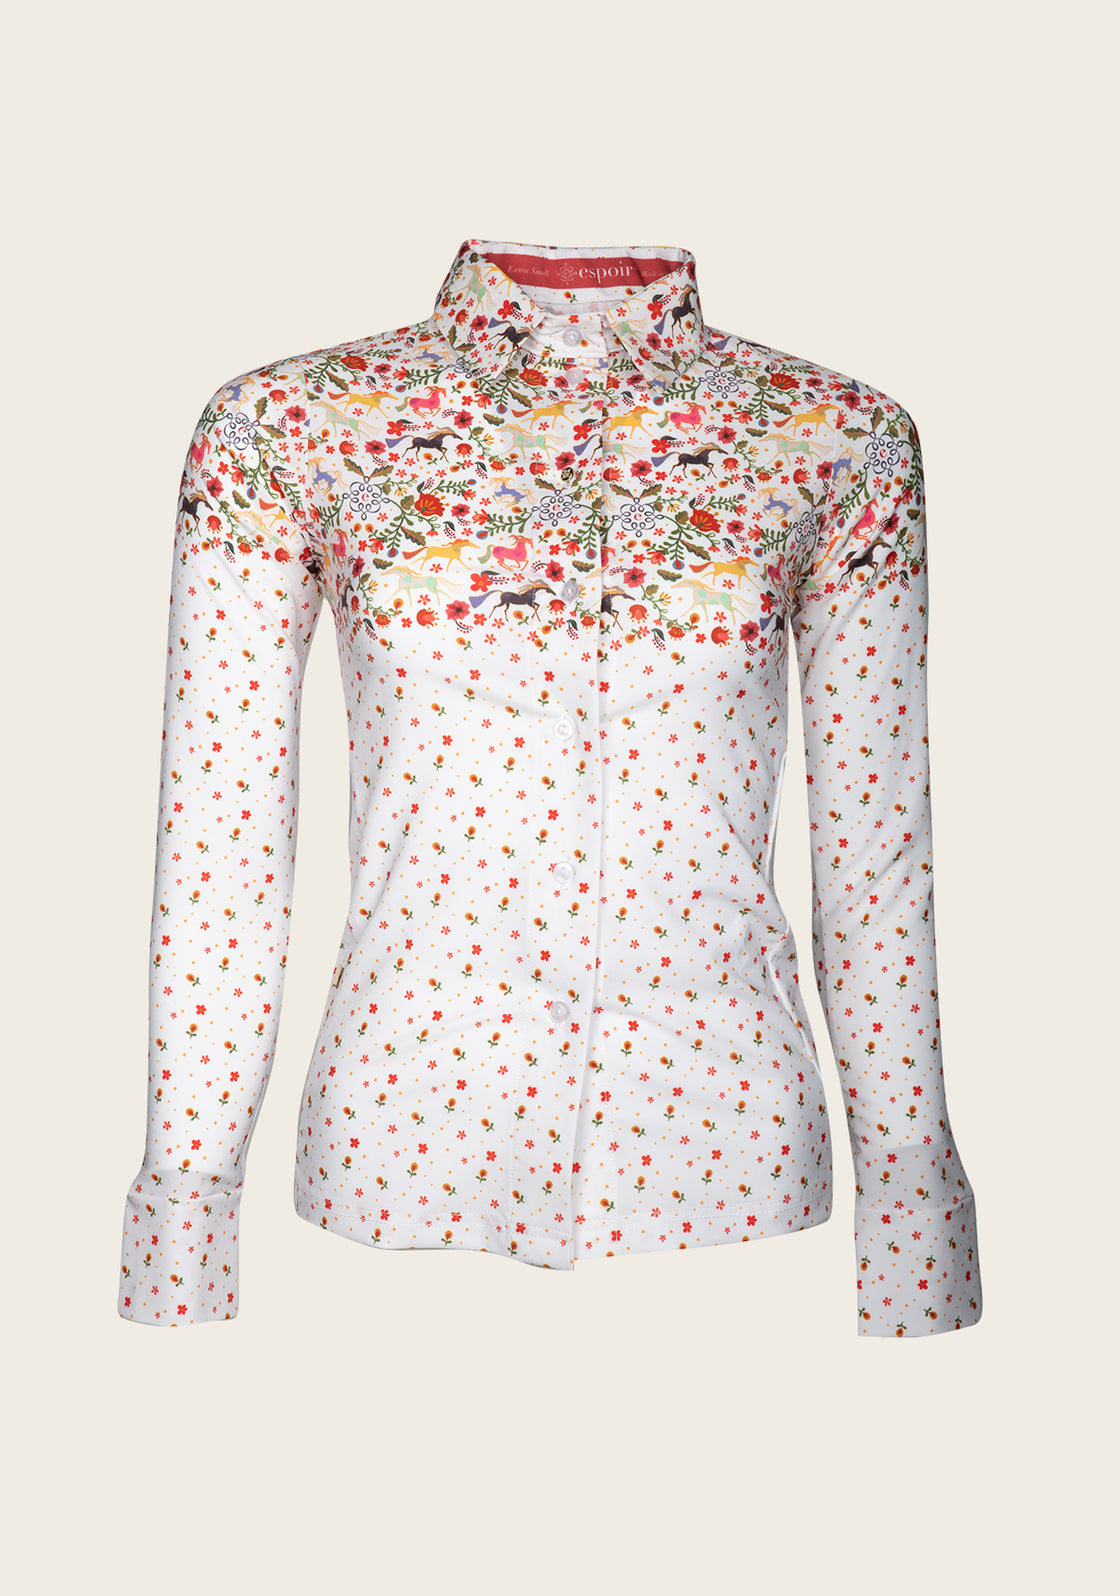 Joie White Floral Ladies’ Button Shirt